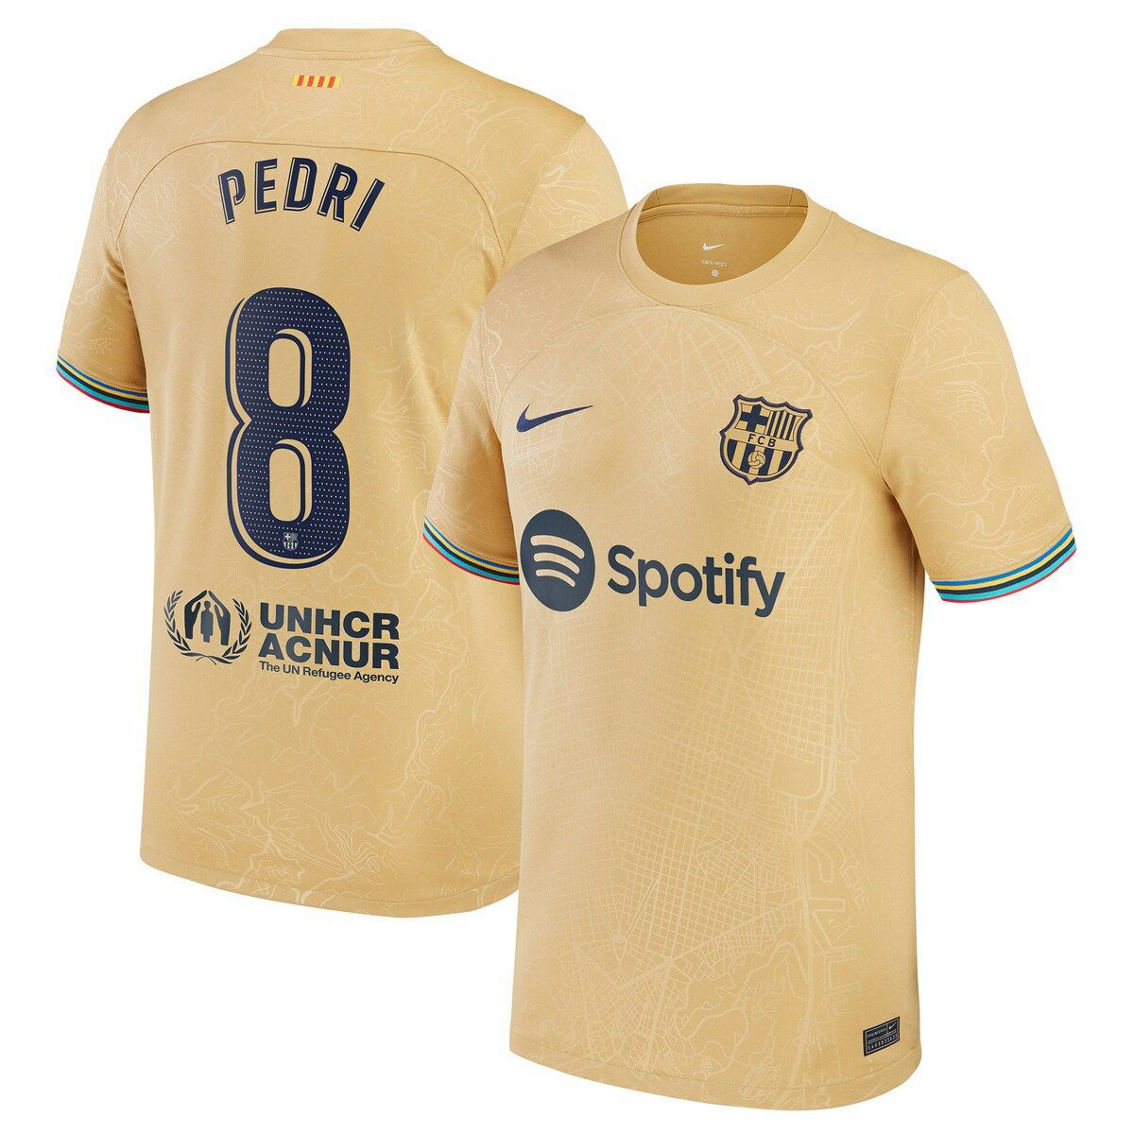 Nike Men's Pedri Gold Barcelona 2022/23 Away Replica Player Jersey - Image 2 of 4